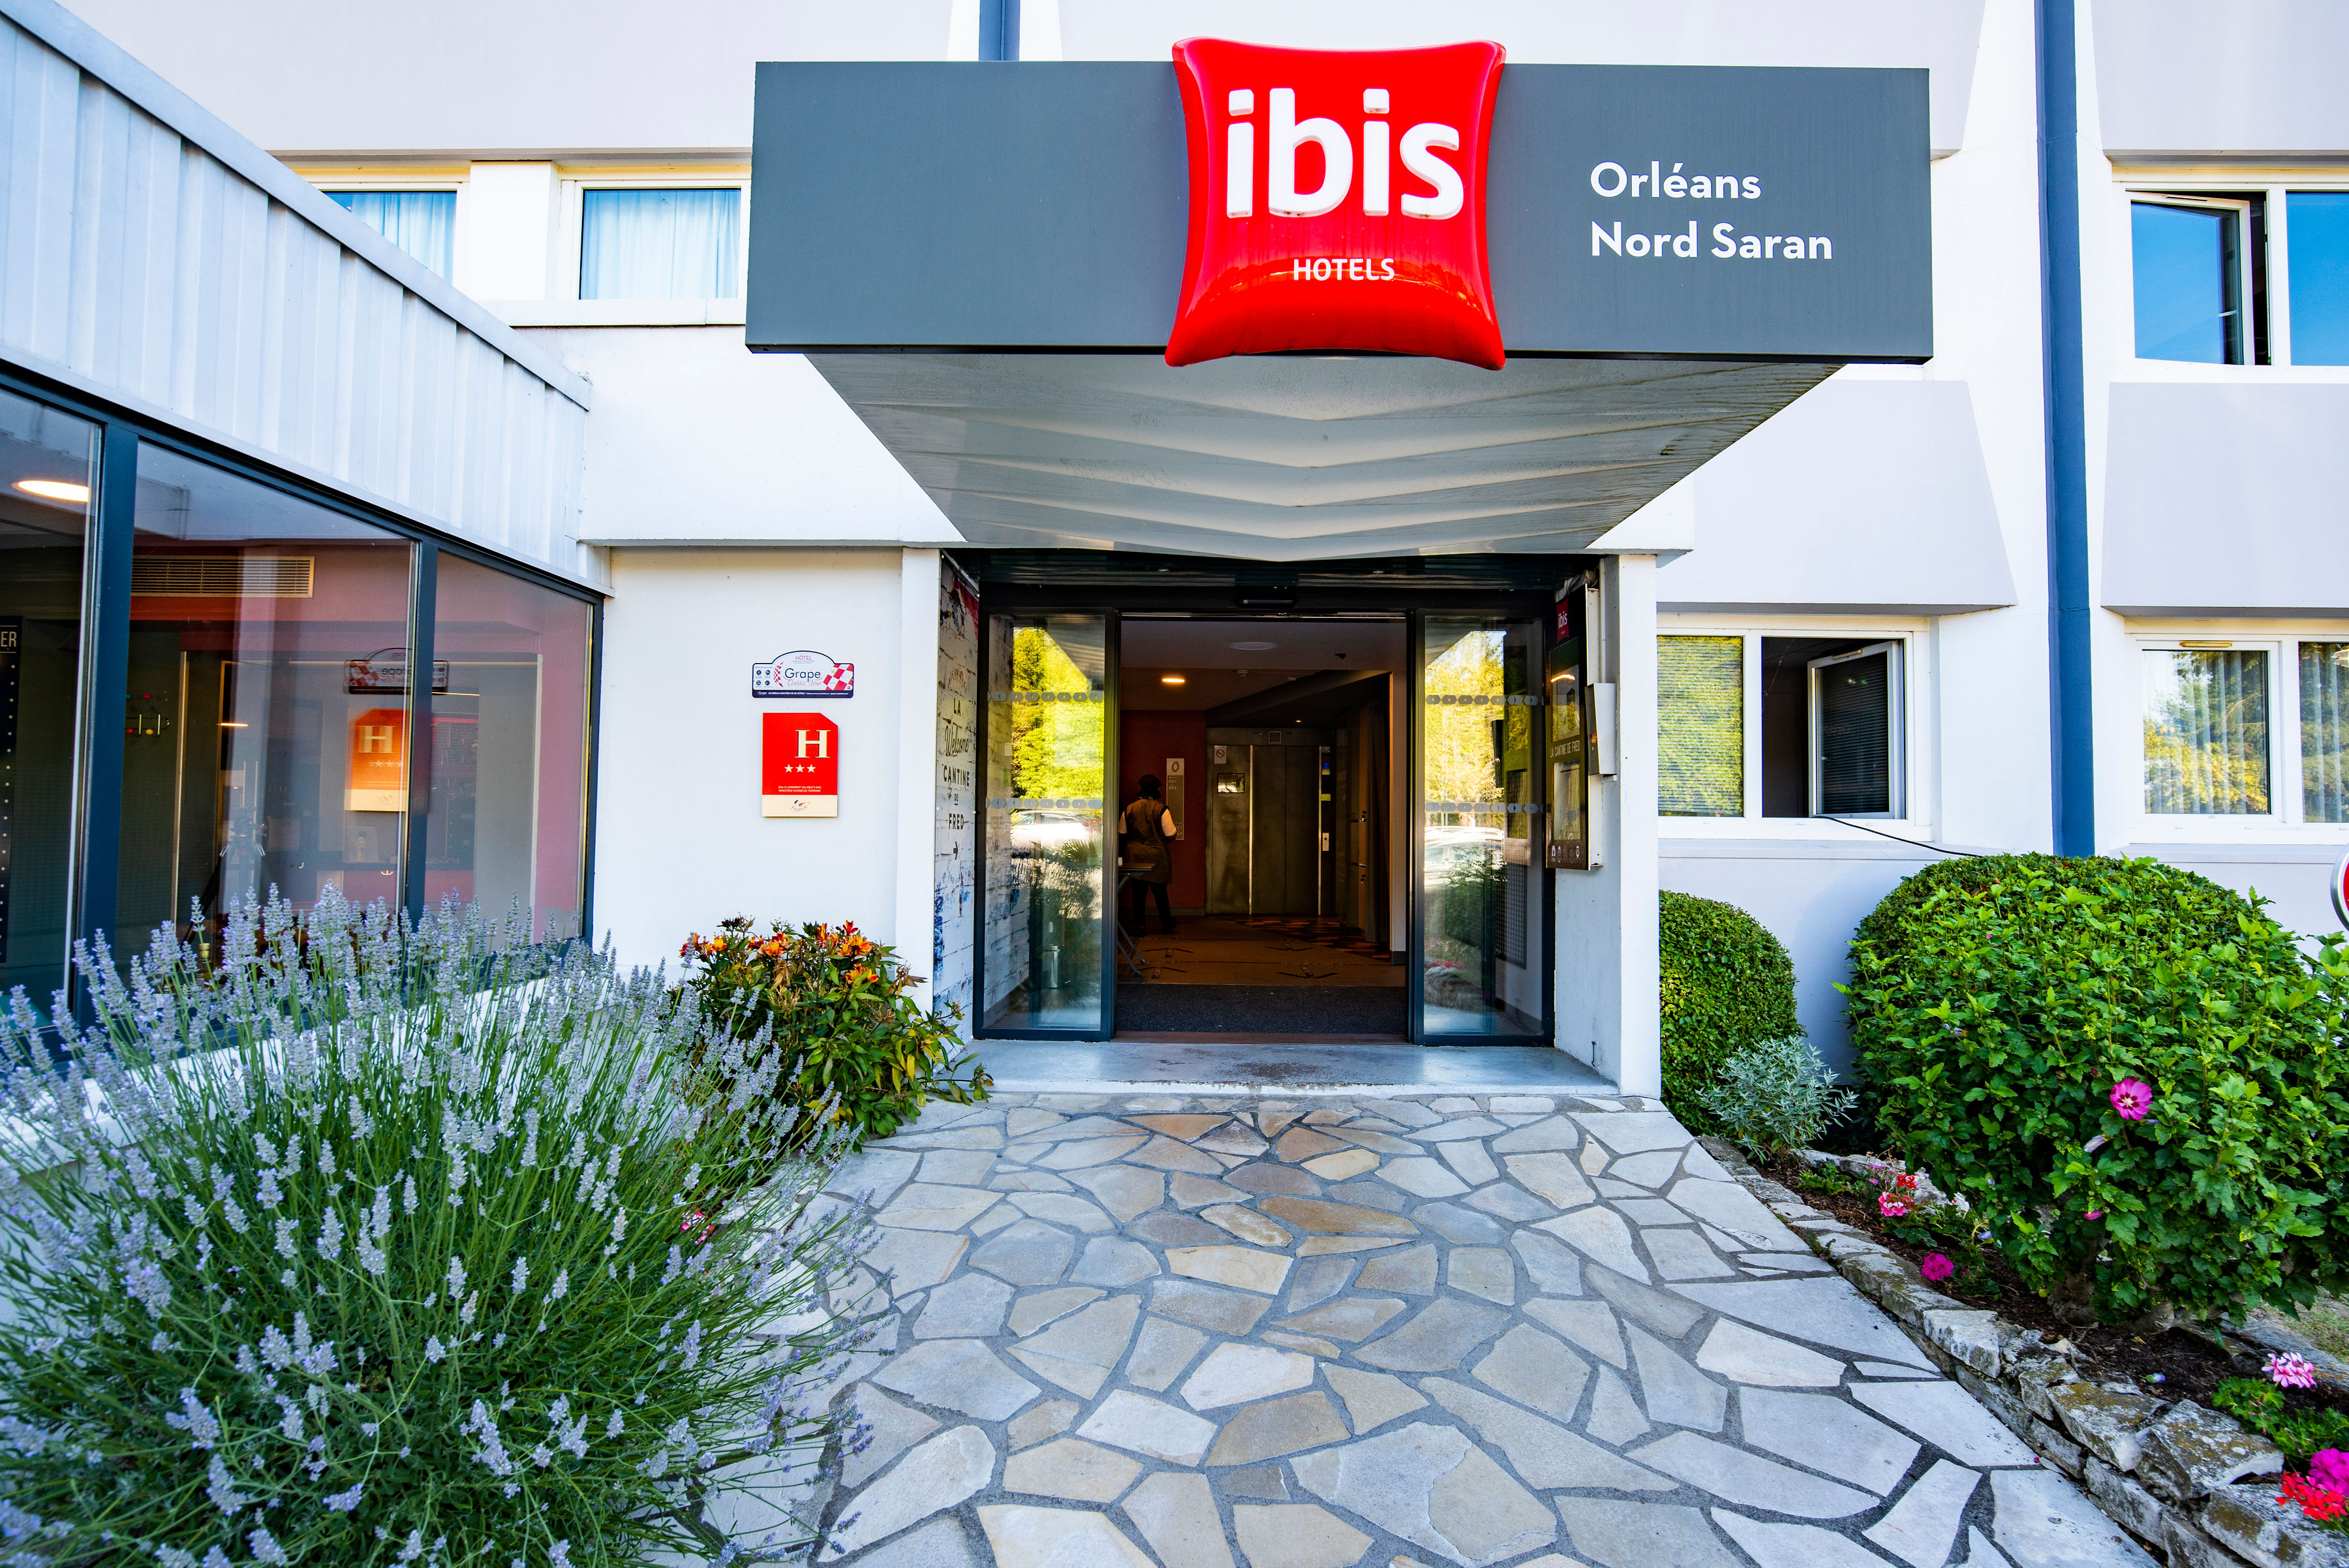 Hotel Ibis Orléans Nord Saran  France Centre-Val de Loire Loiret Saran 45770